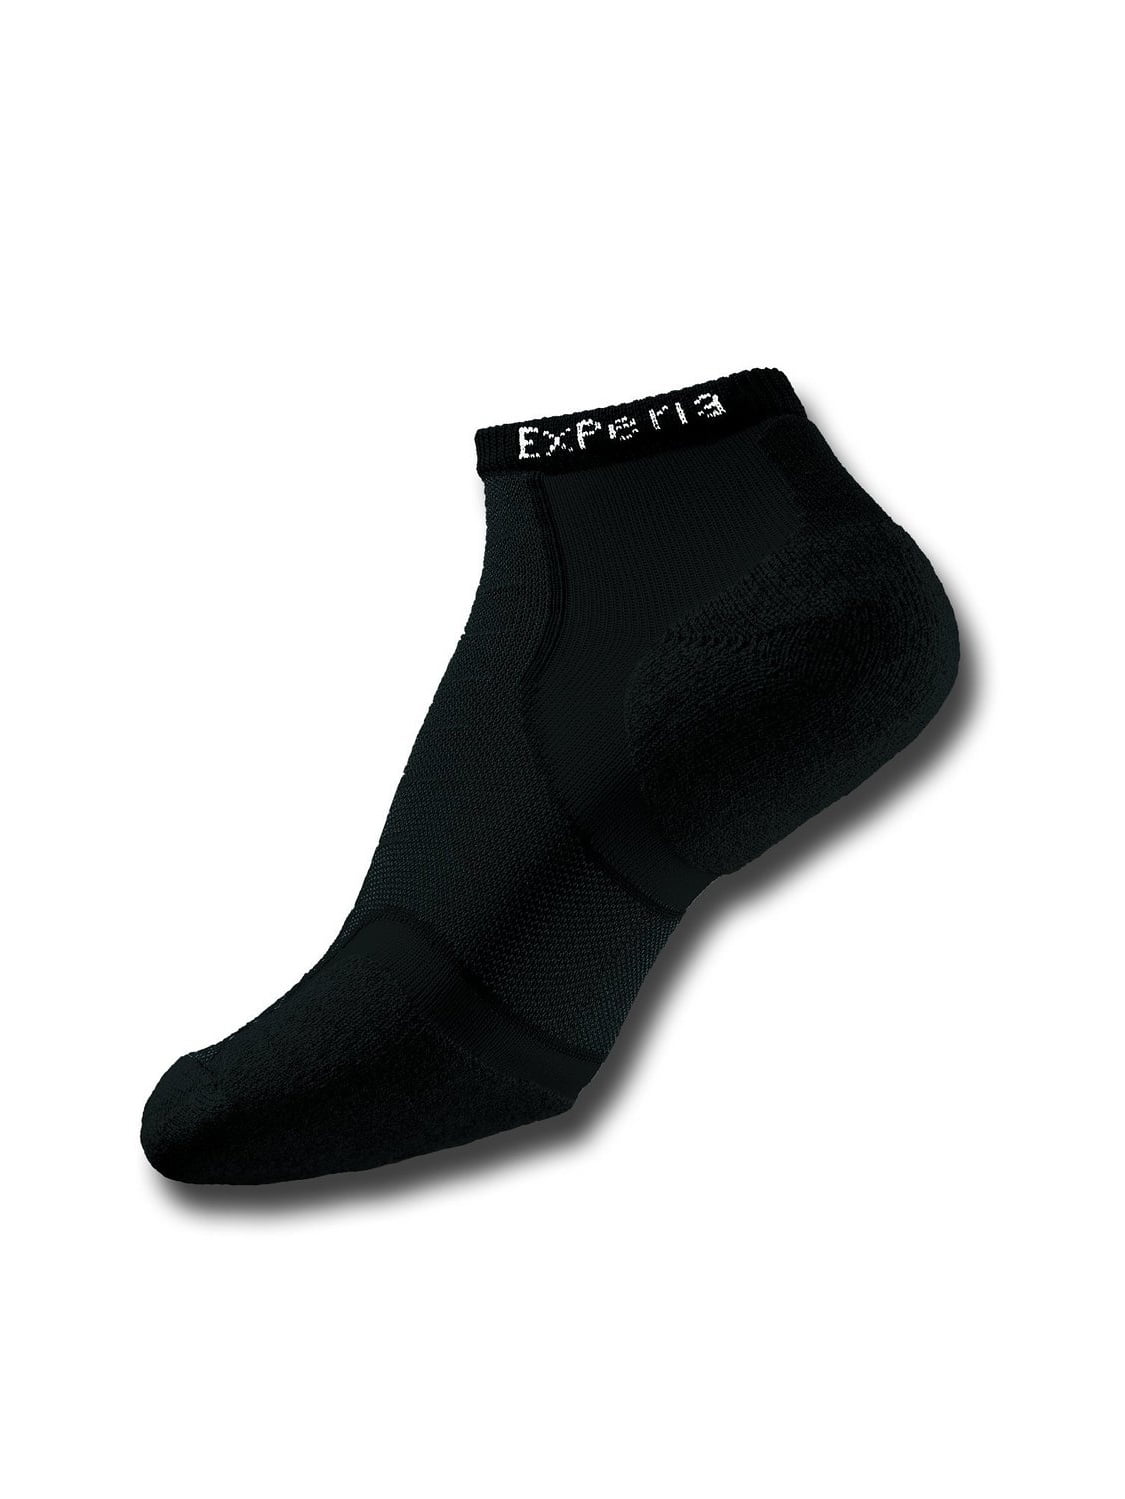 Black Thorlos Experia CoolMax Micro Mini Crew Running Socks 